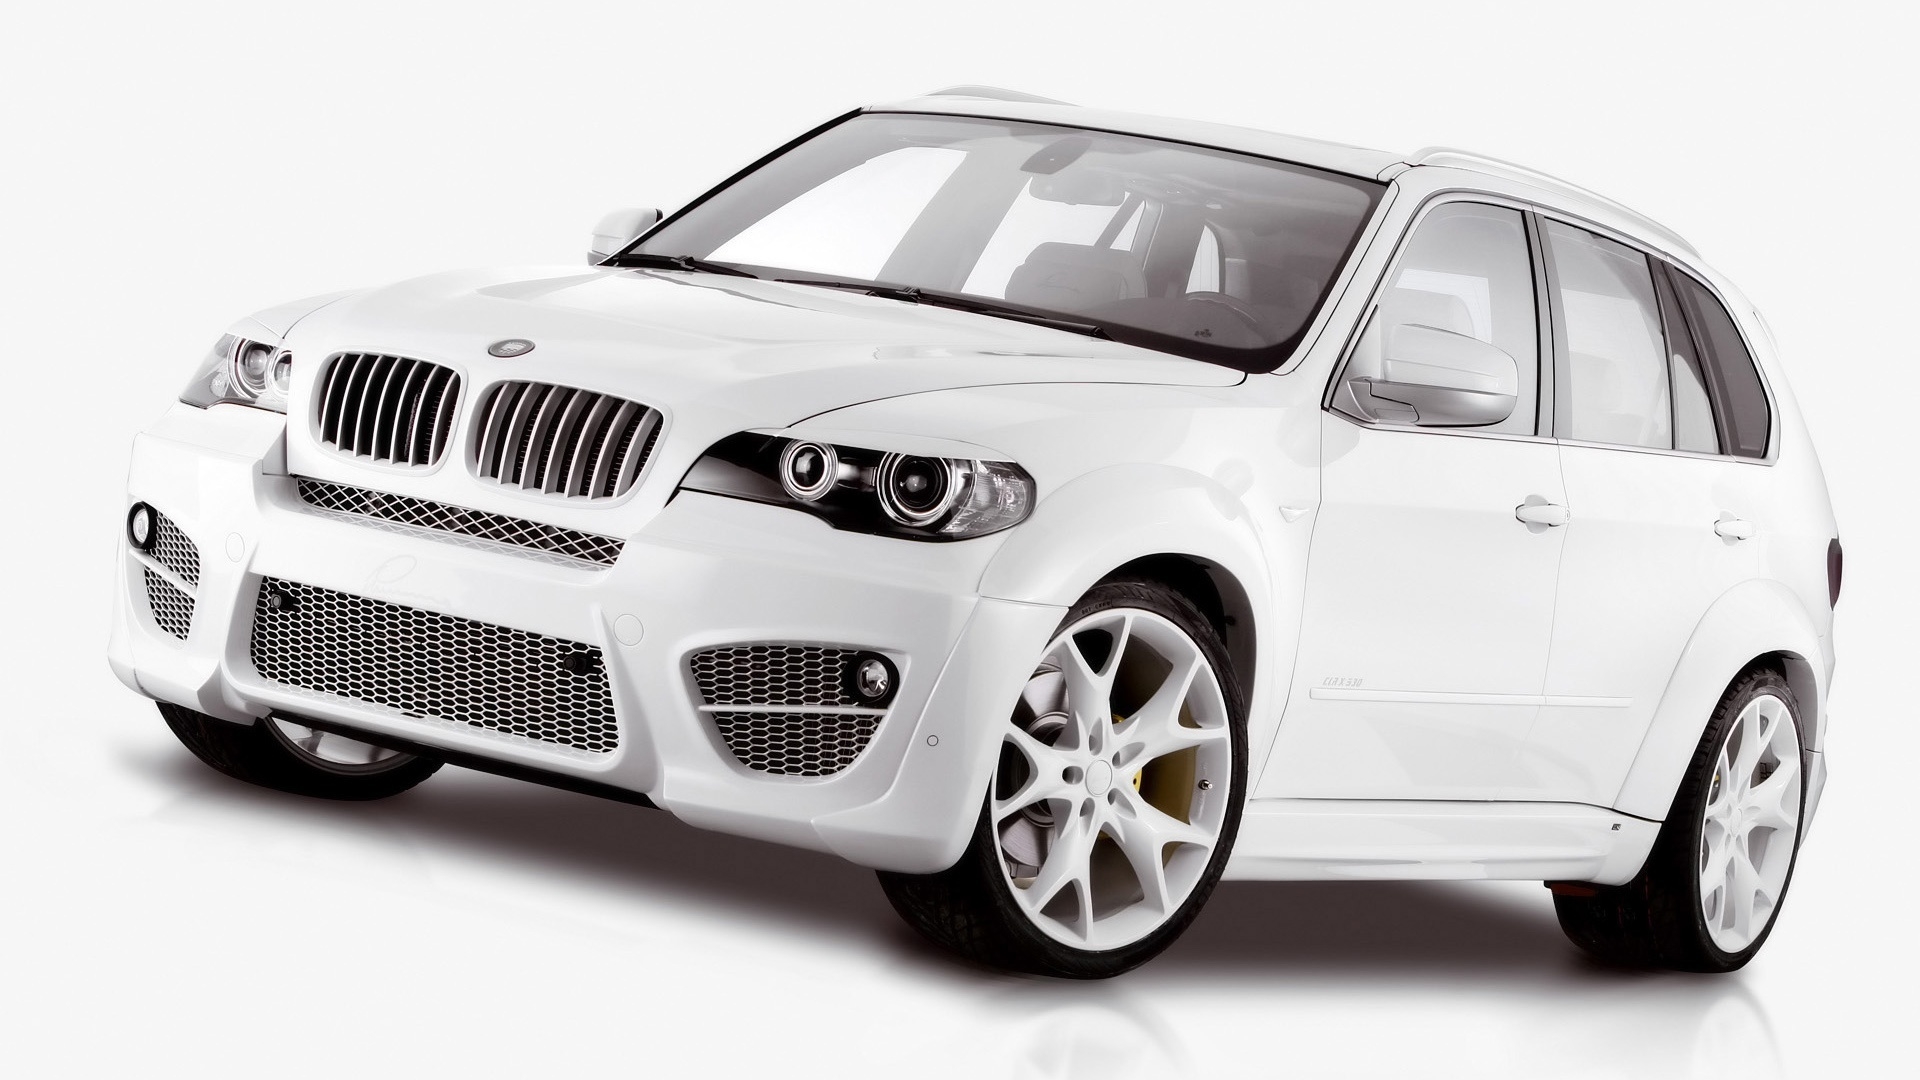 BMW CLR X530 Lumma Design 2008 for 1920 x 1080 HDTV 1080p resolution